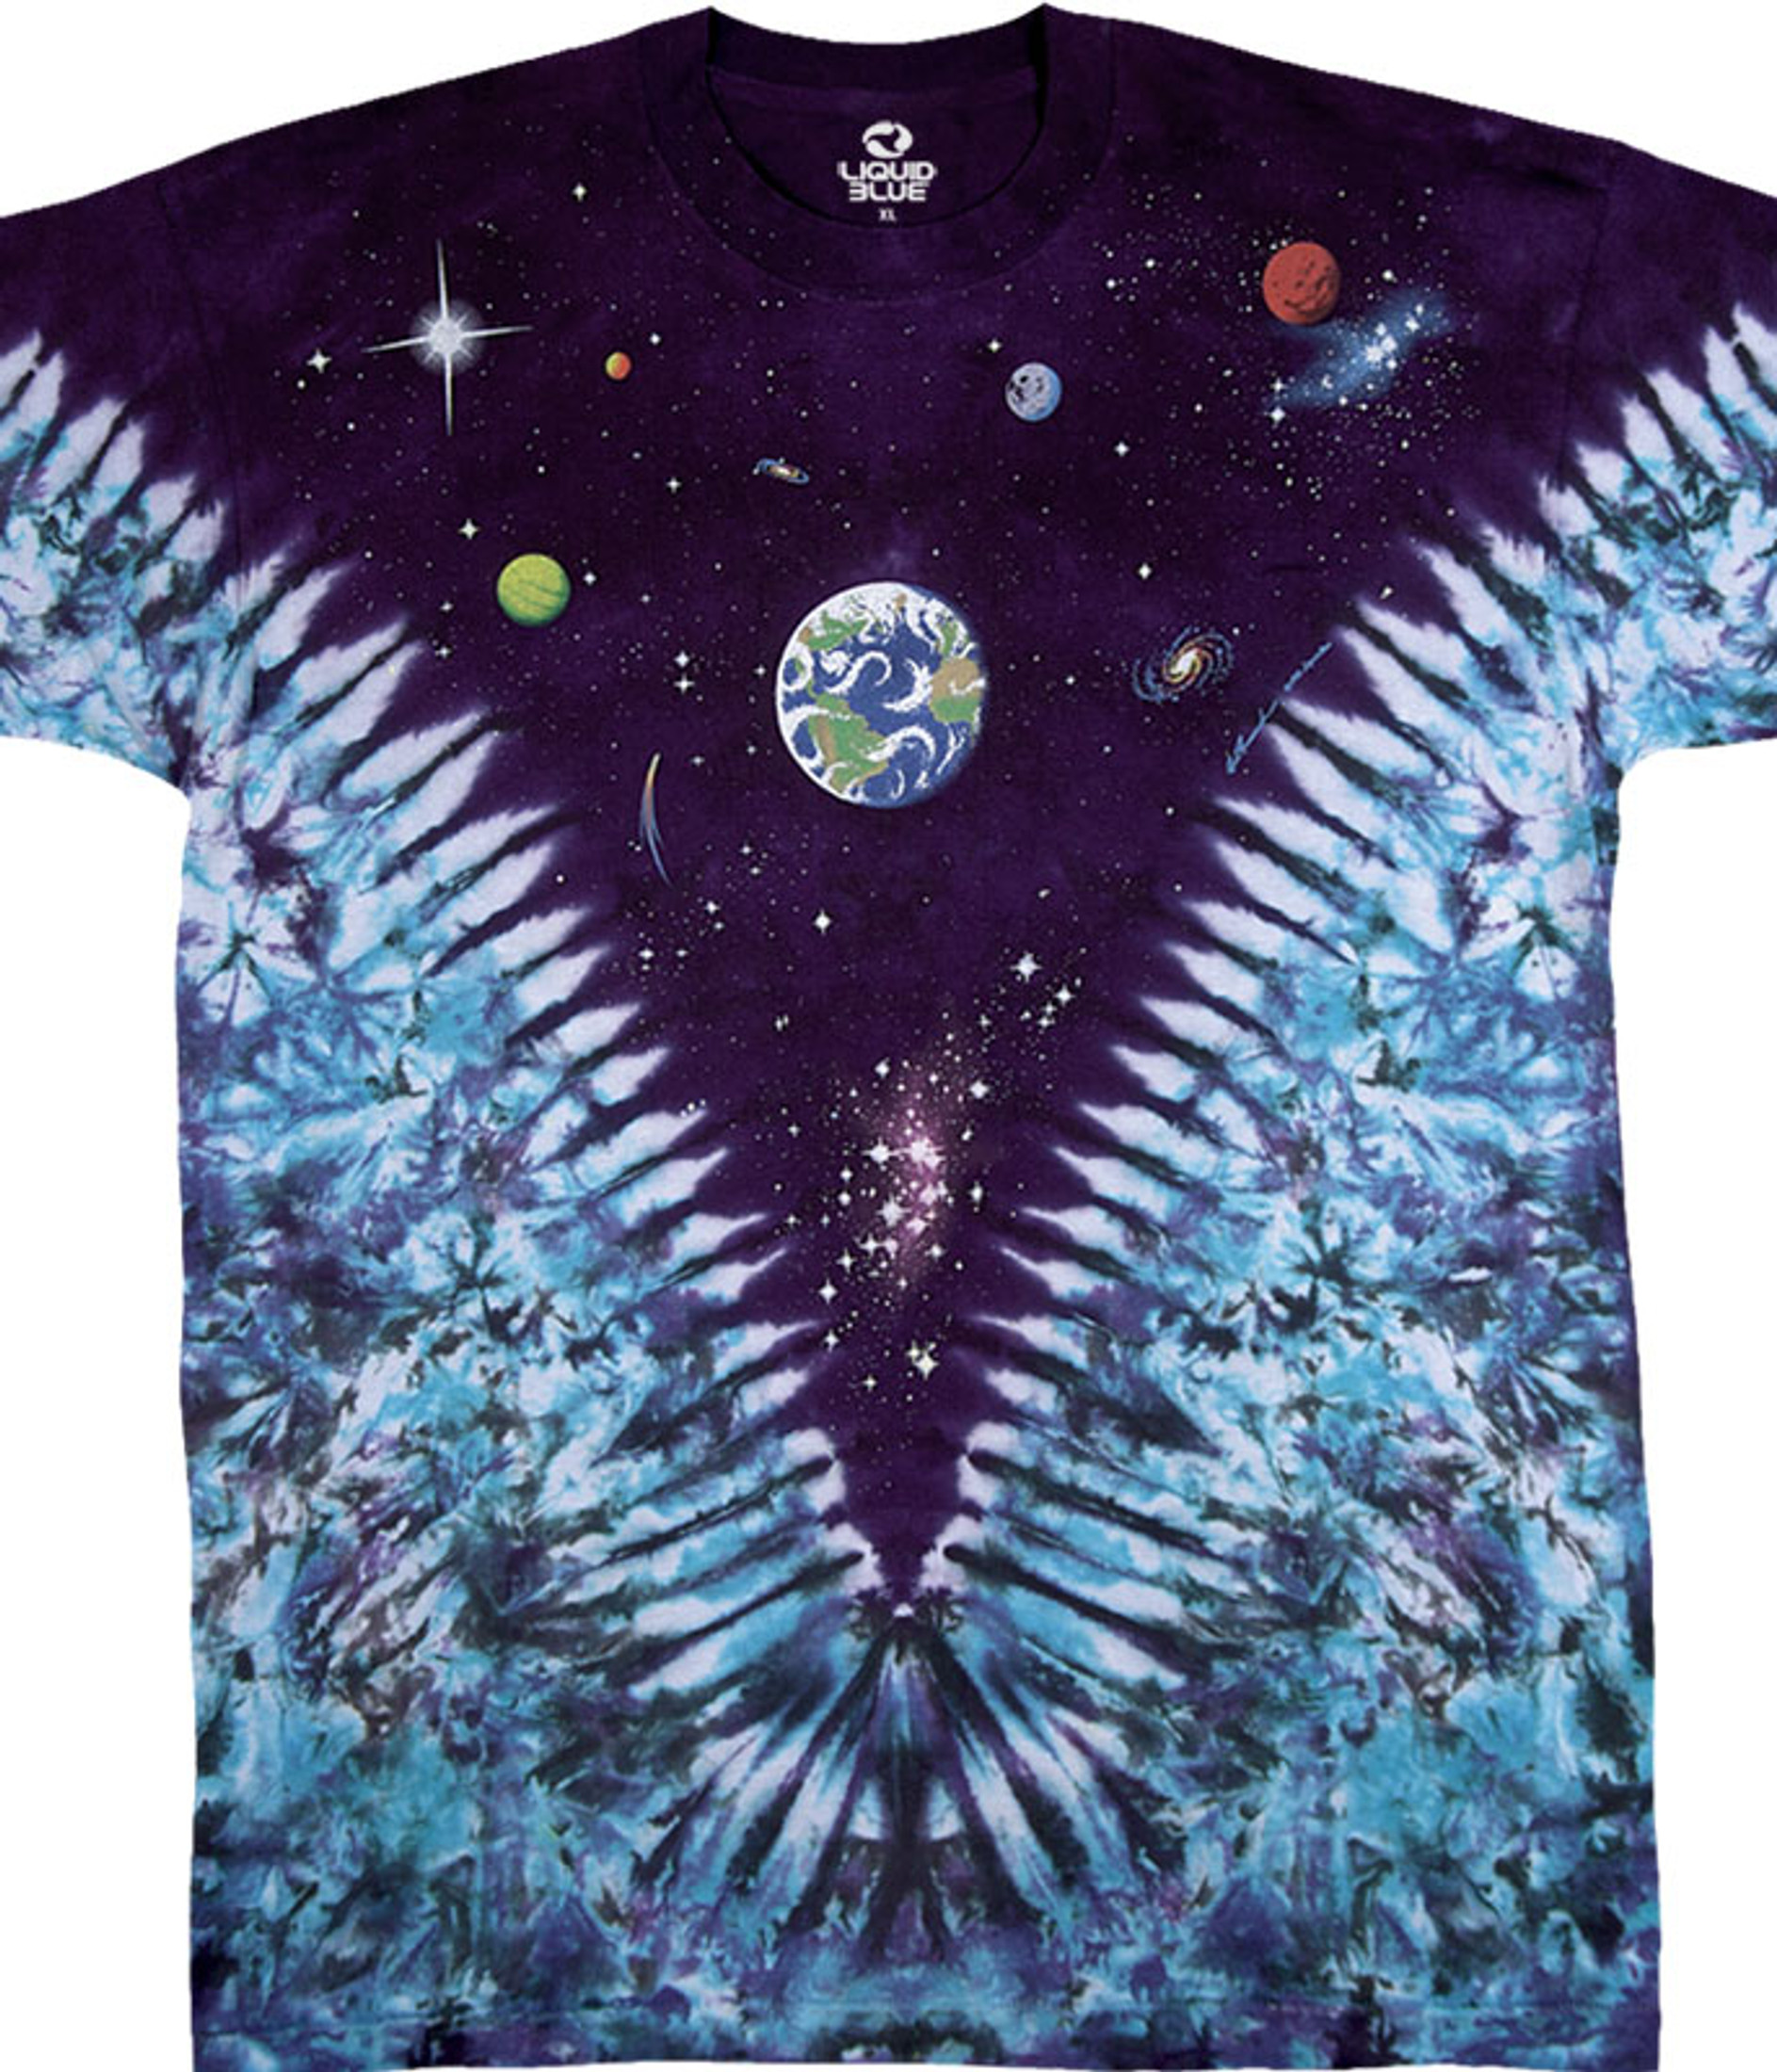 Purple / Black Crystal Wash Tie Dye T-Shirt